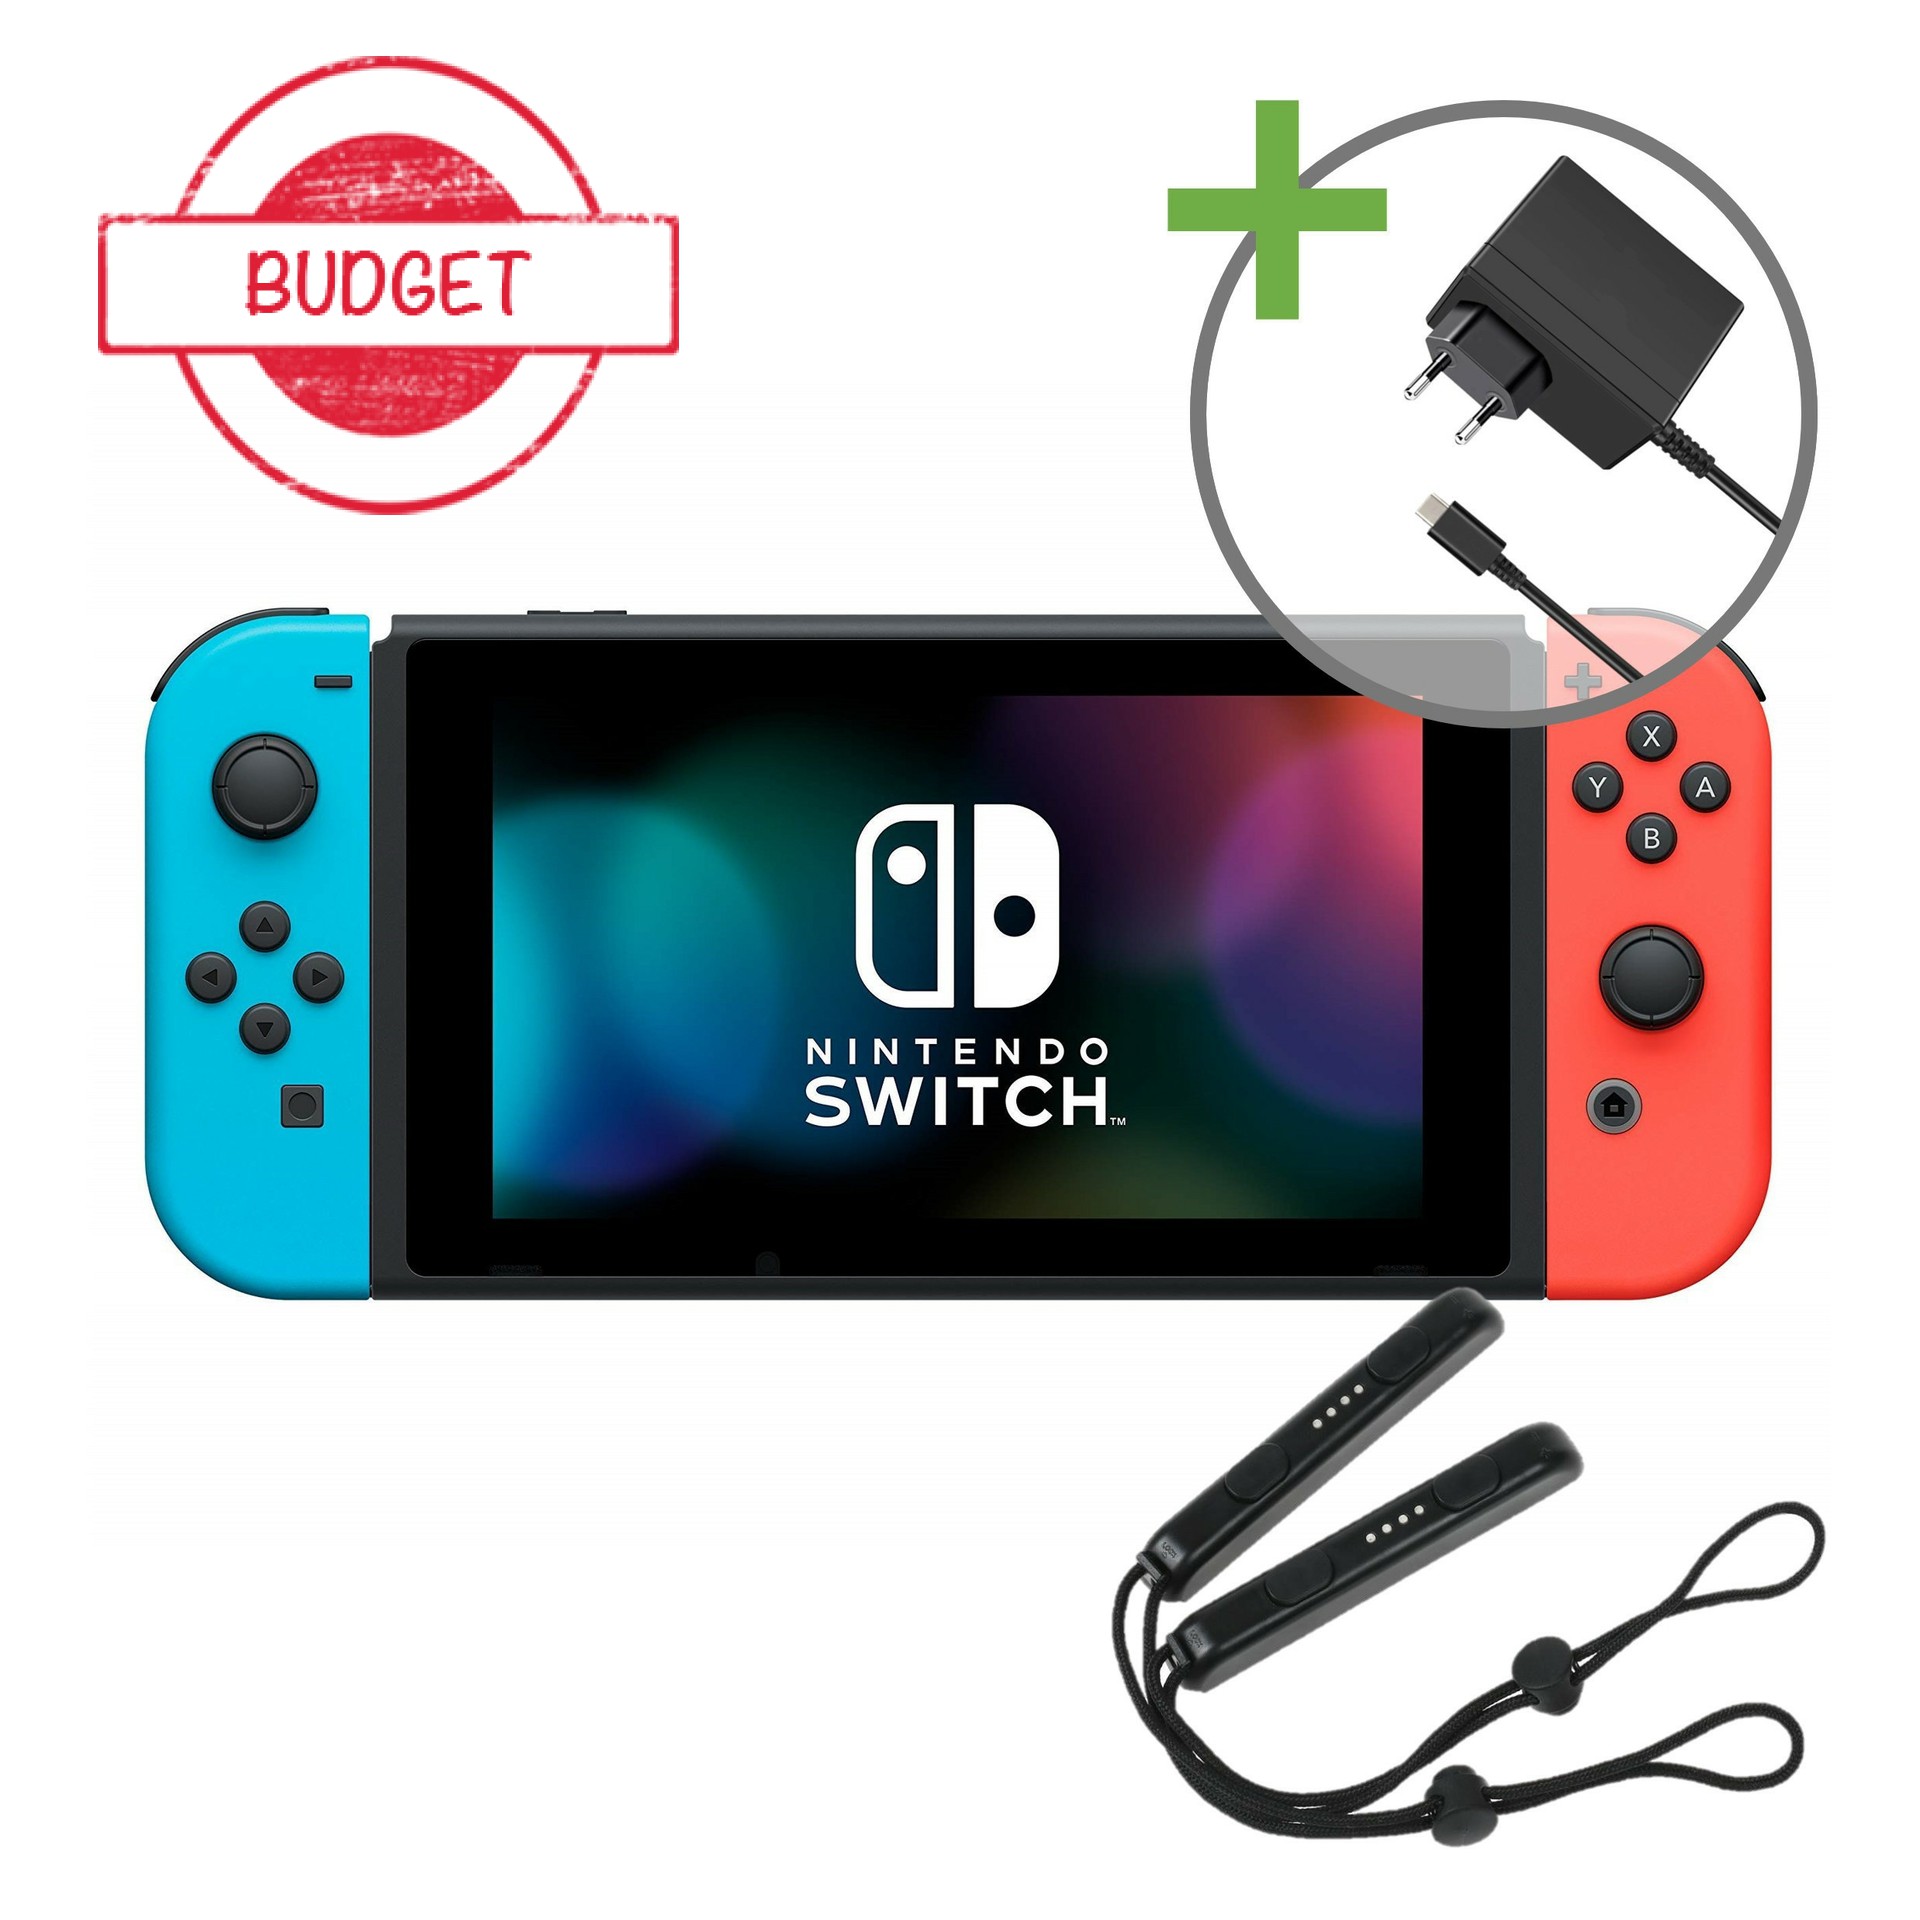 Nintendo Switch Console - Rood/Blauw - Budget Kopen | Nintendo Switch Hardware